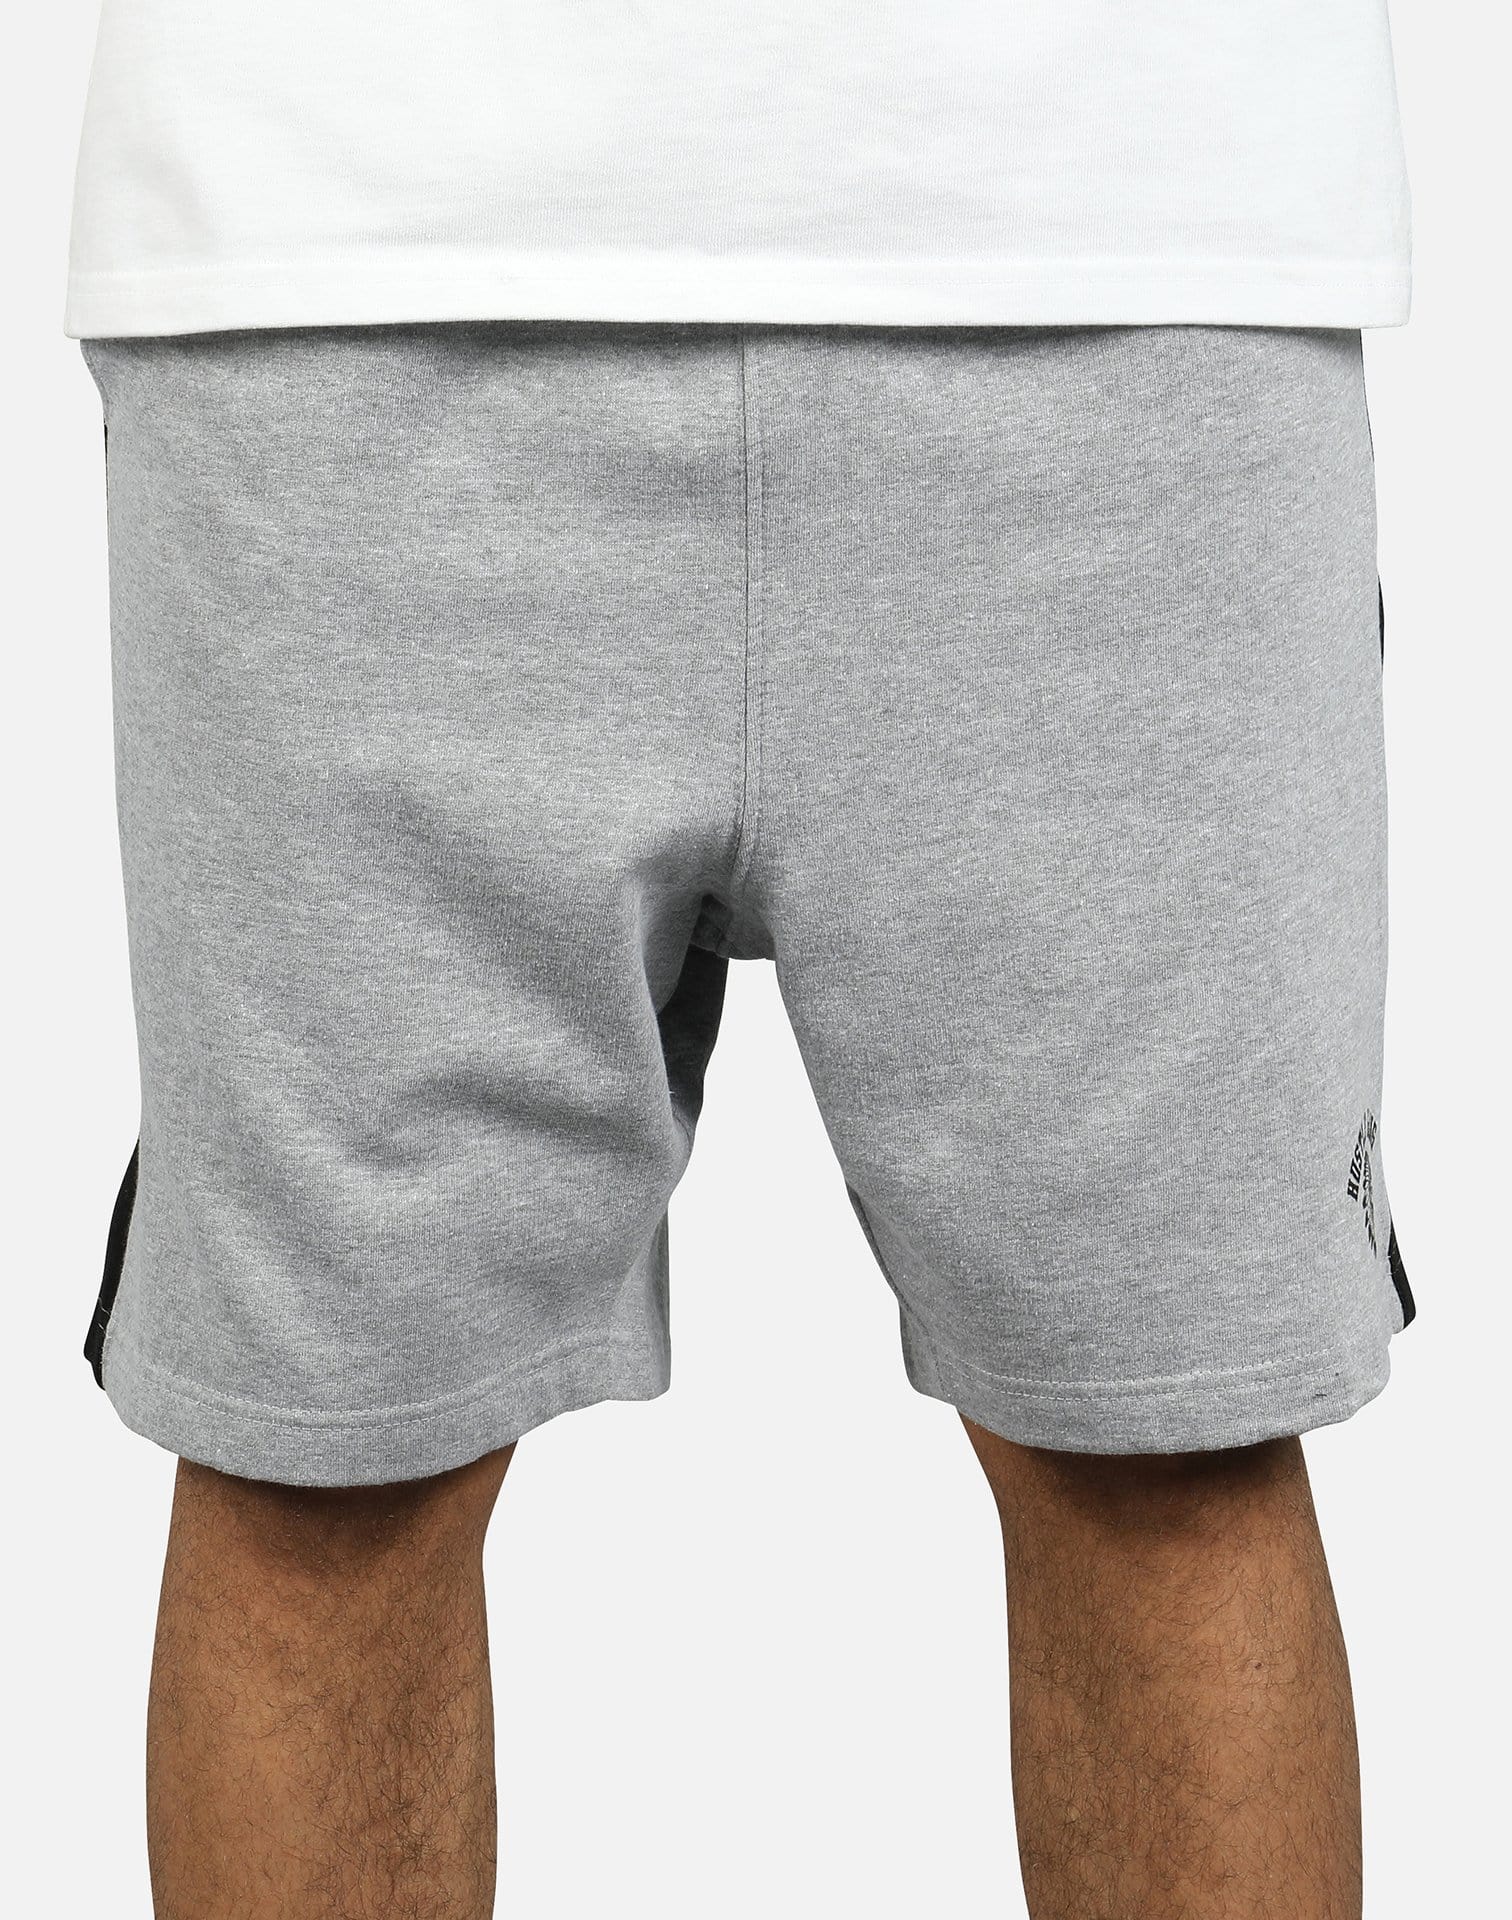 Hustle Gang Men's Le Patron Fleece Shorts